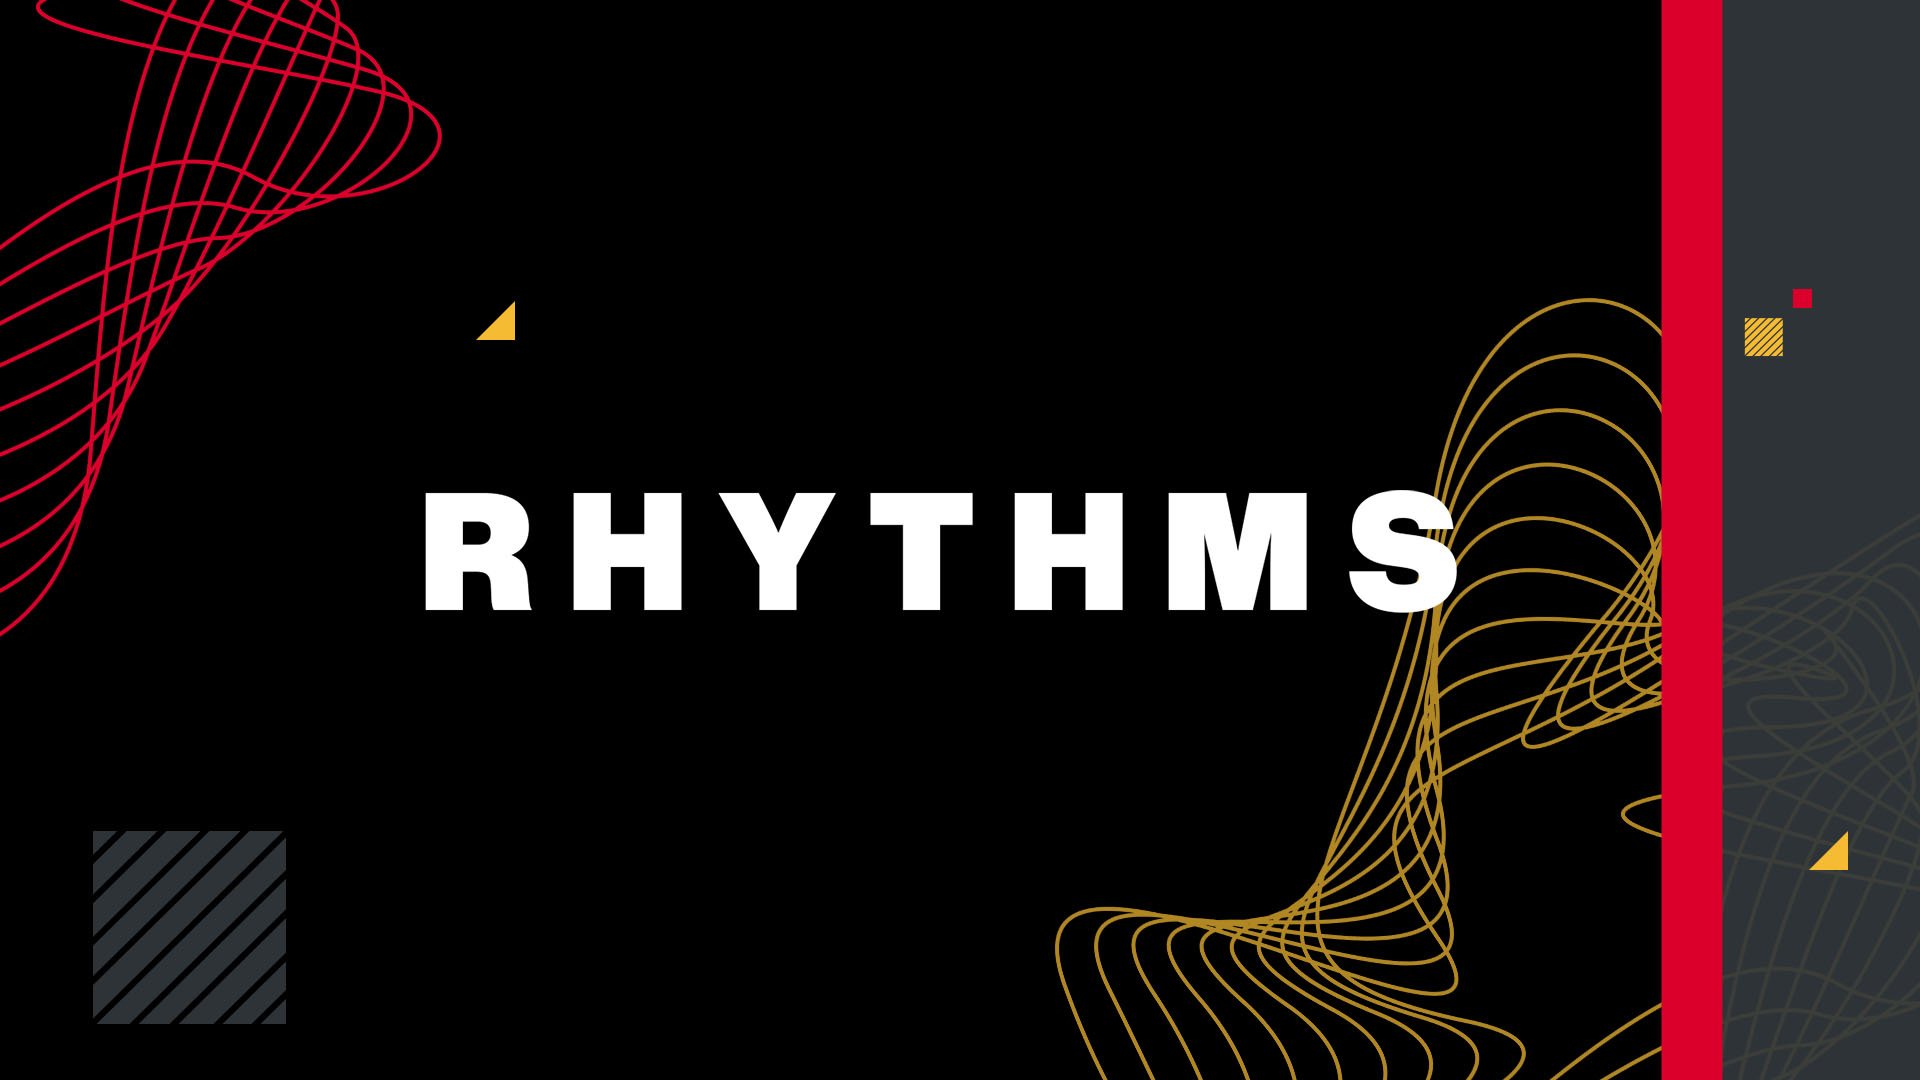 RhythmsHD Title Slide.jpg